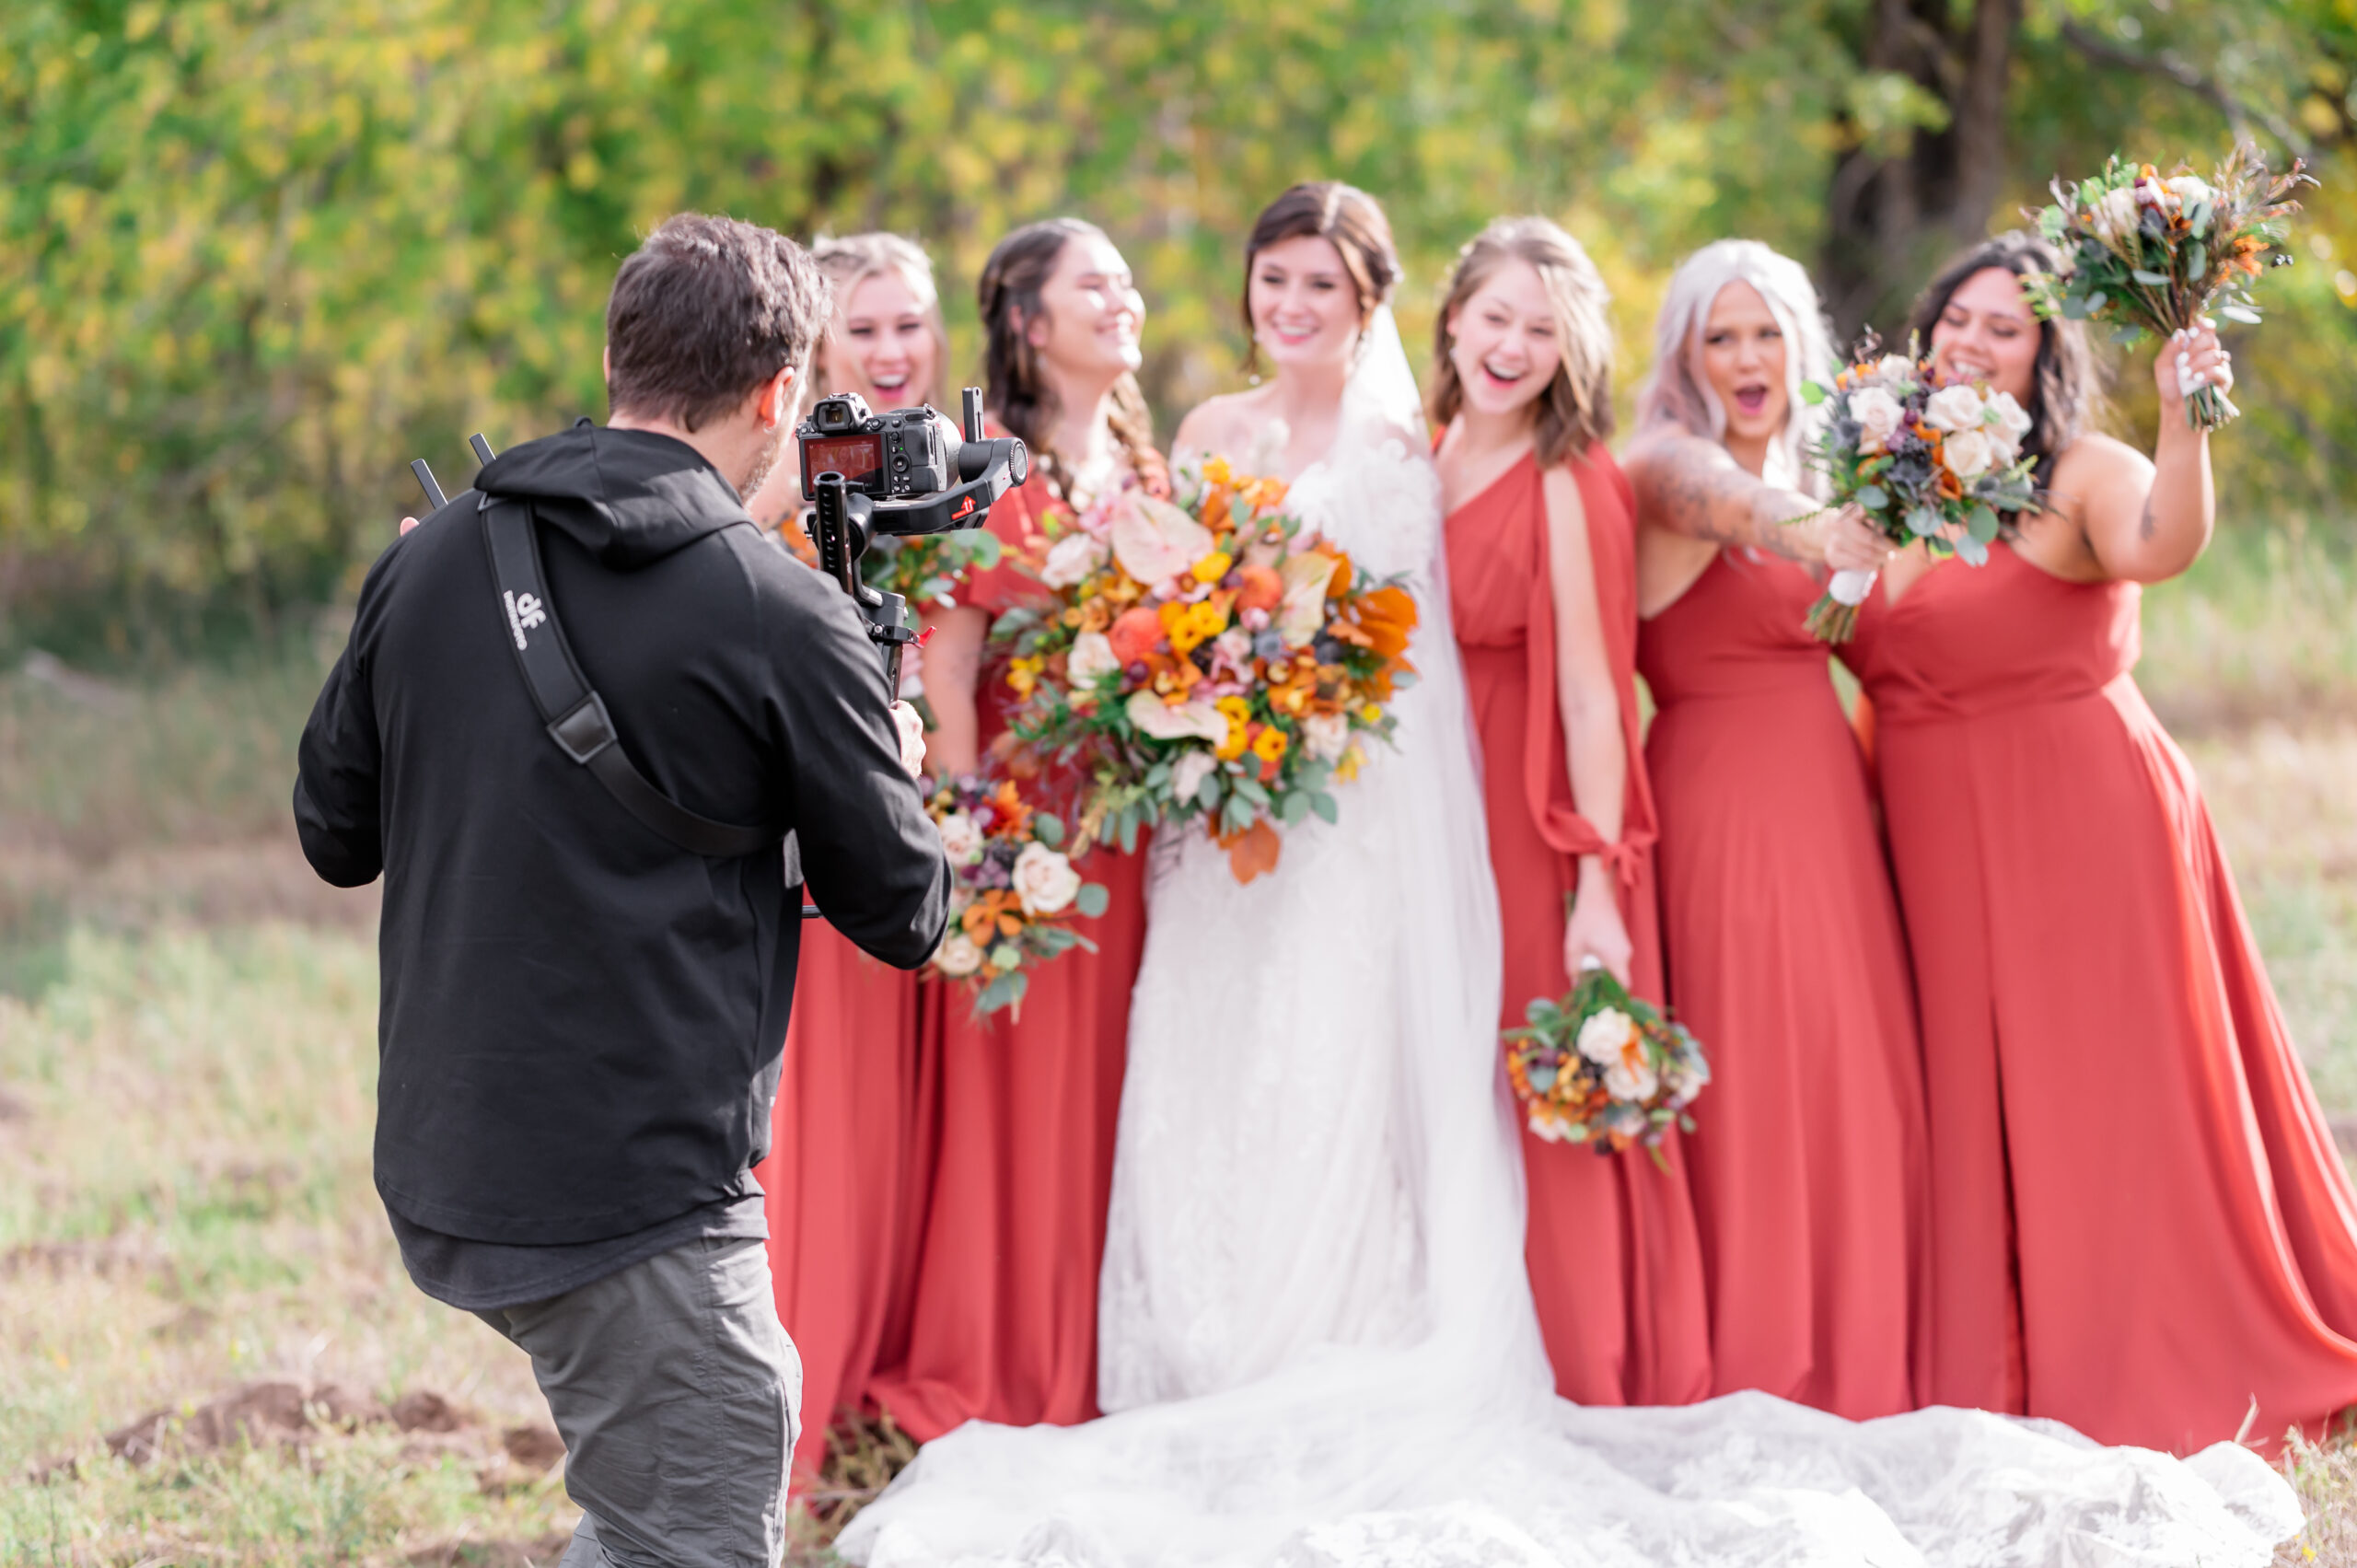 Wedding Day Photographer Checklist | Britni Girard Photography